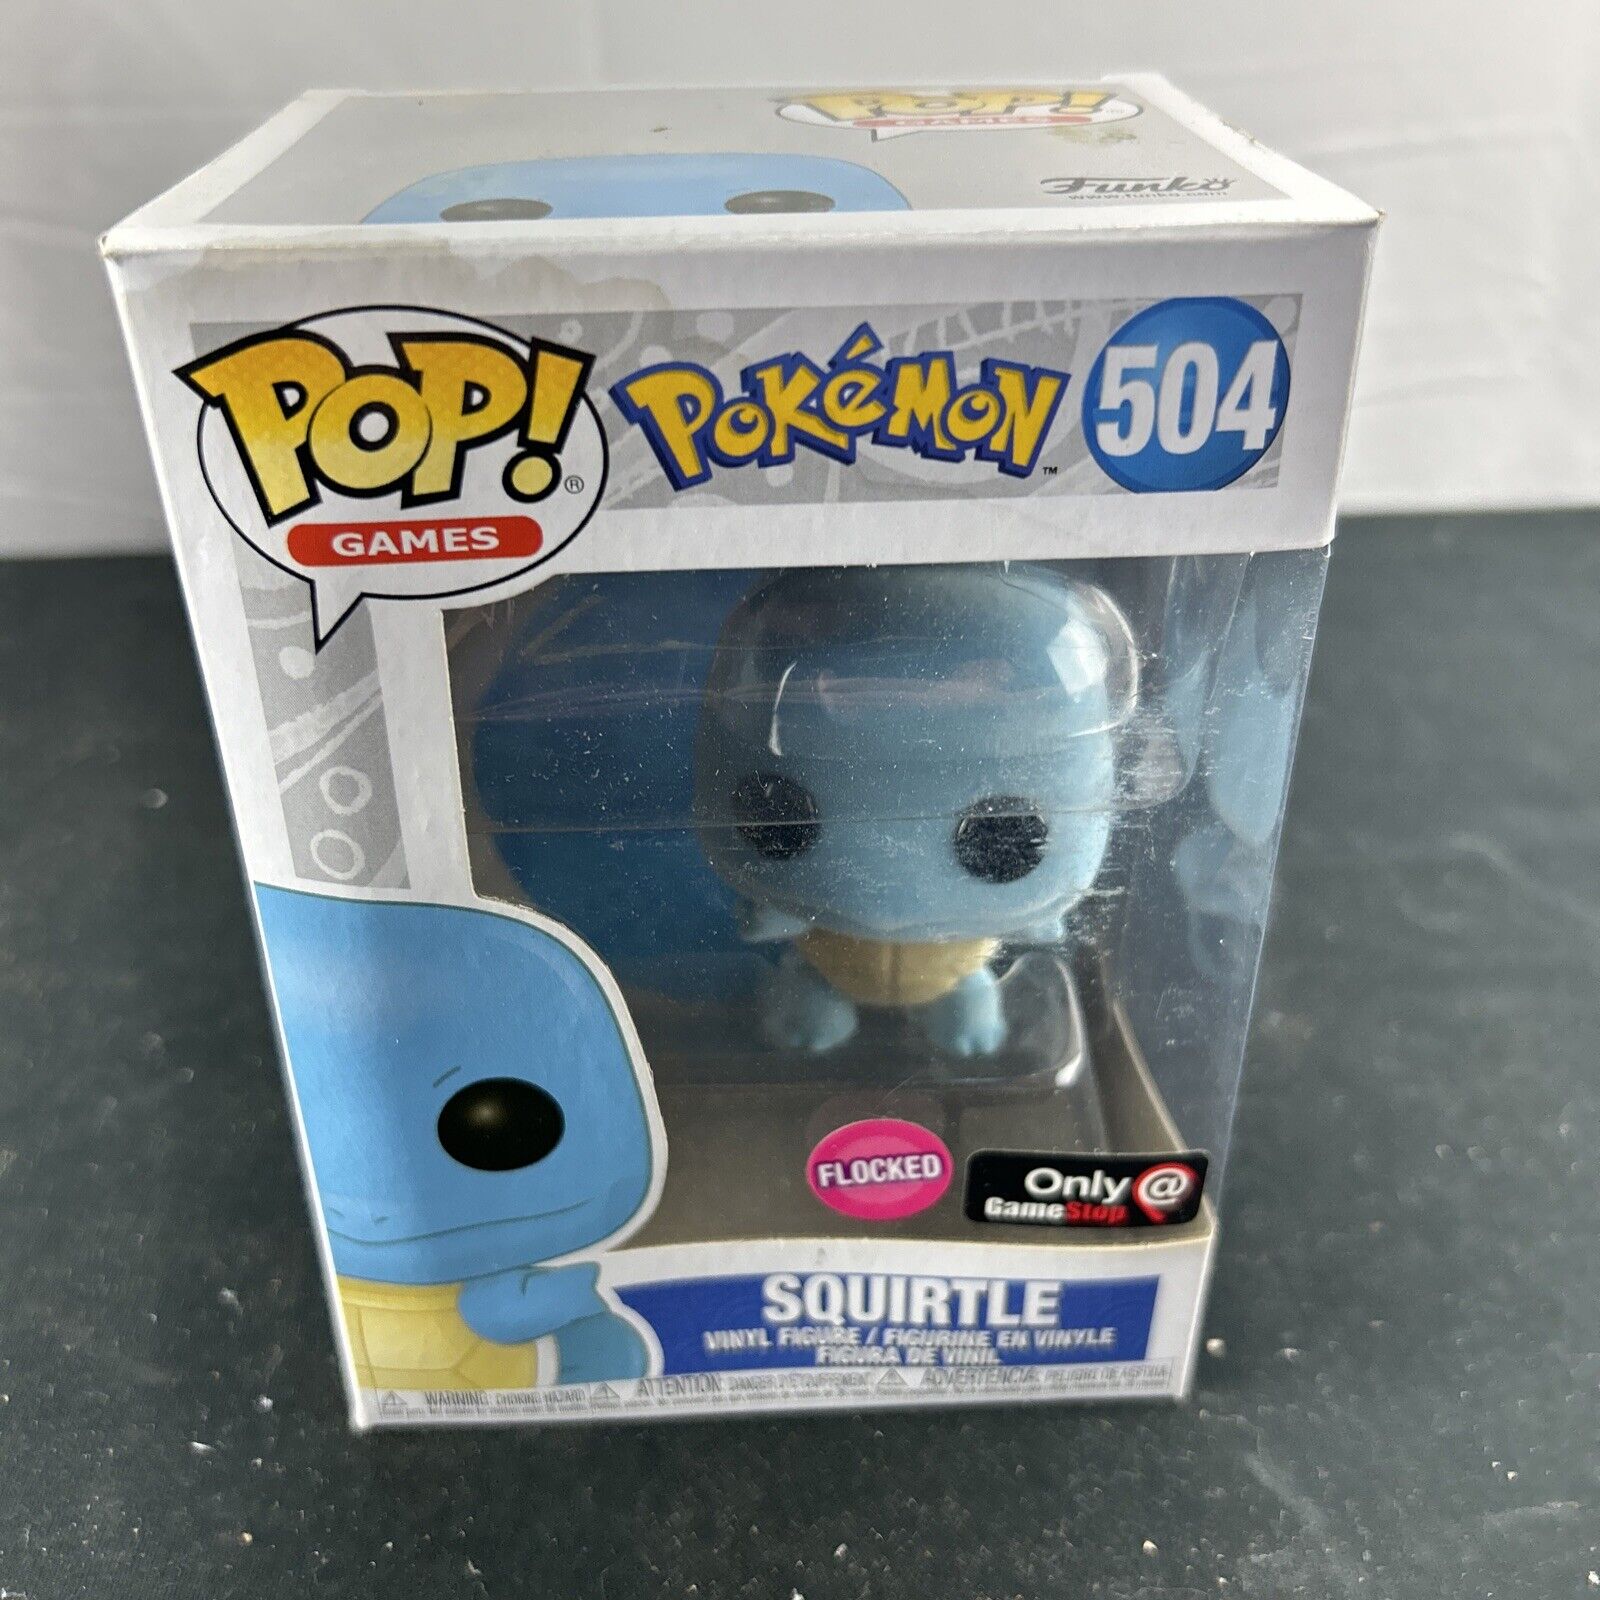 Funko Pop: Pokémon - Squirtle (Flocked) - GameStop (Exclusive) #504 Damaged Box